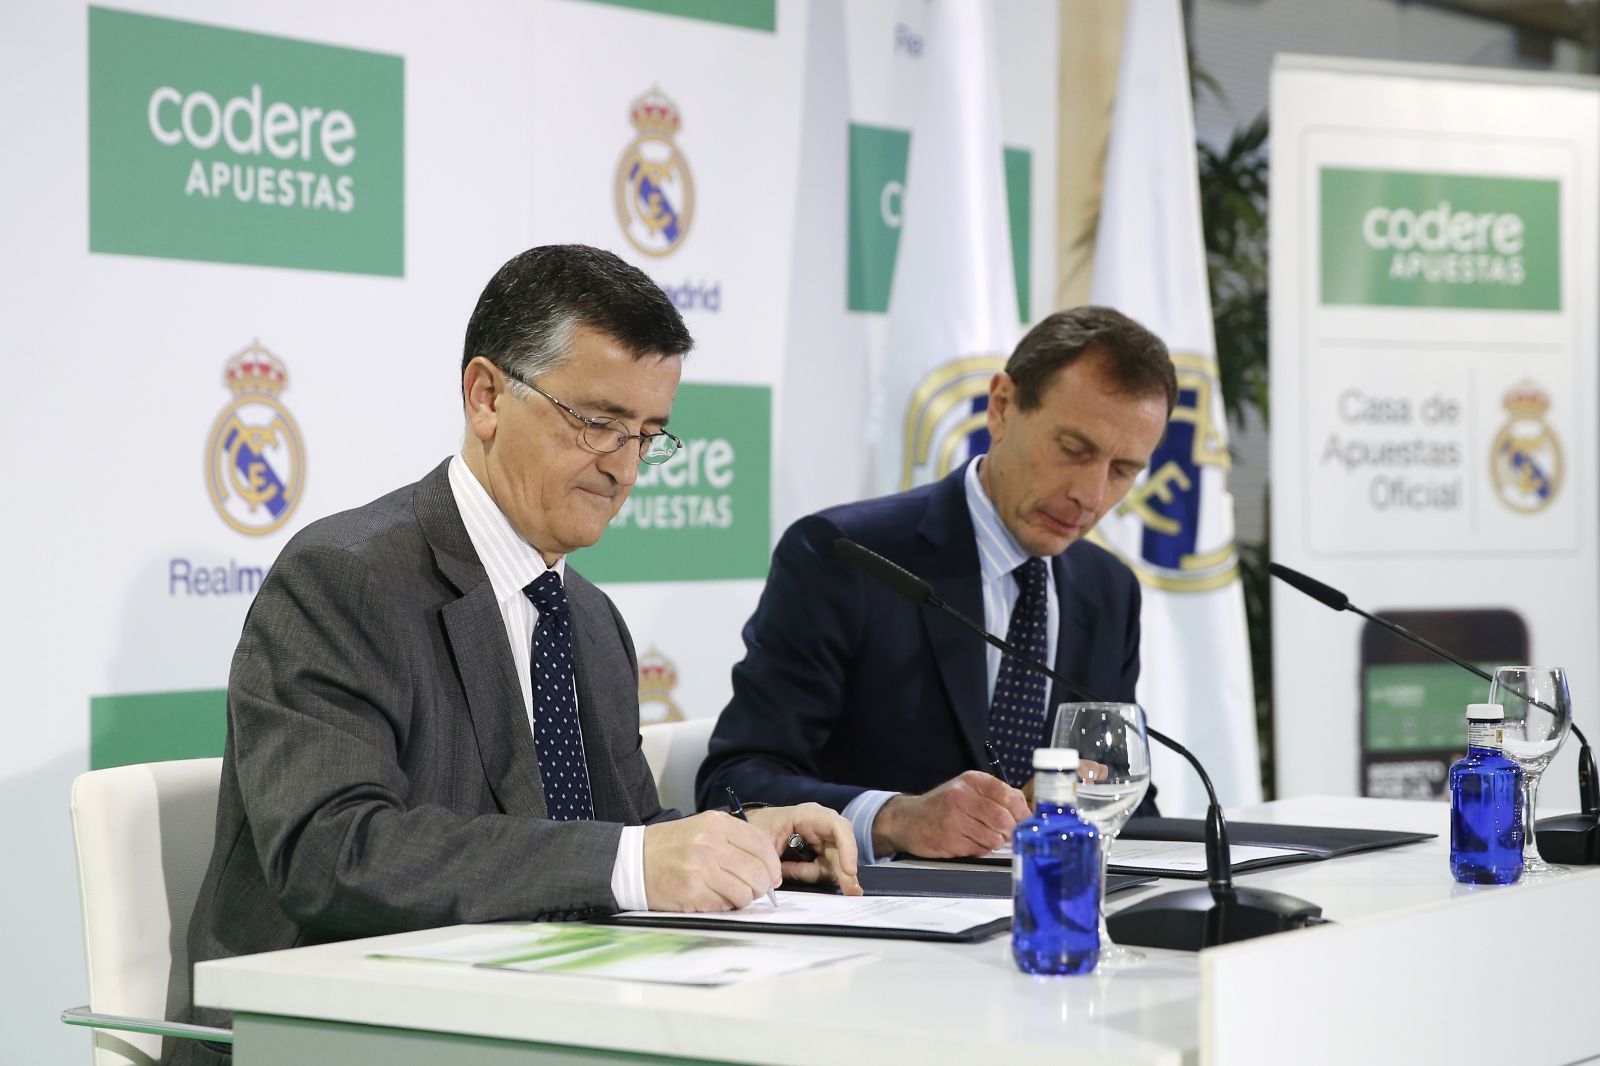 Codere es sponsor del Real Madrid desde 2018. (Foto: grupocodere.com)